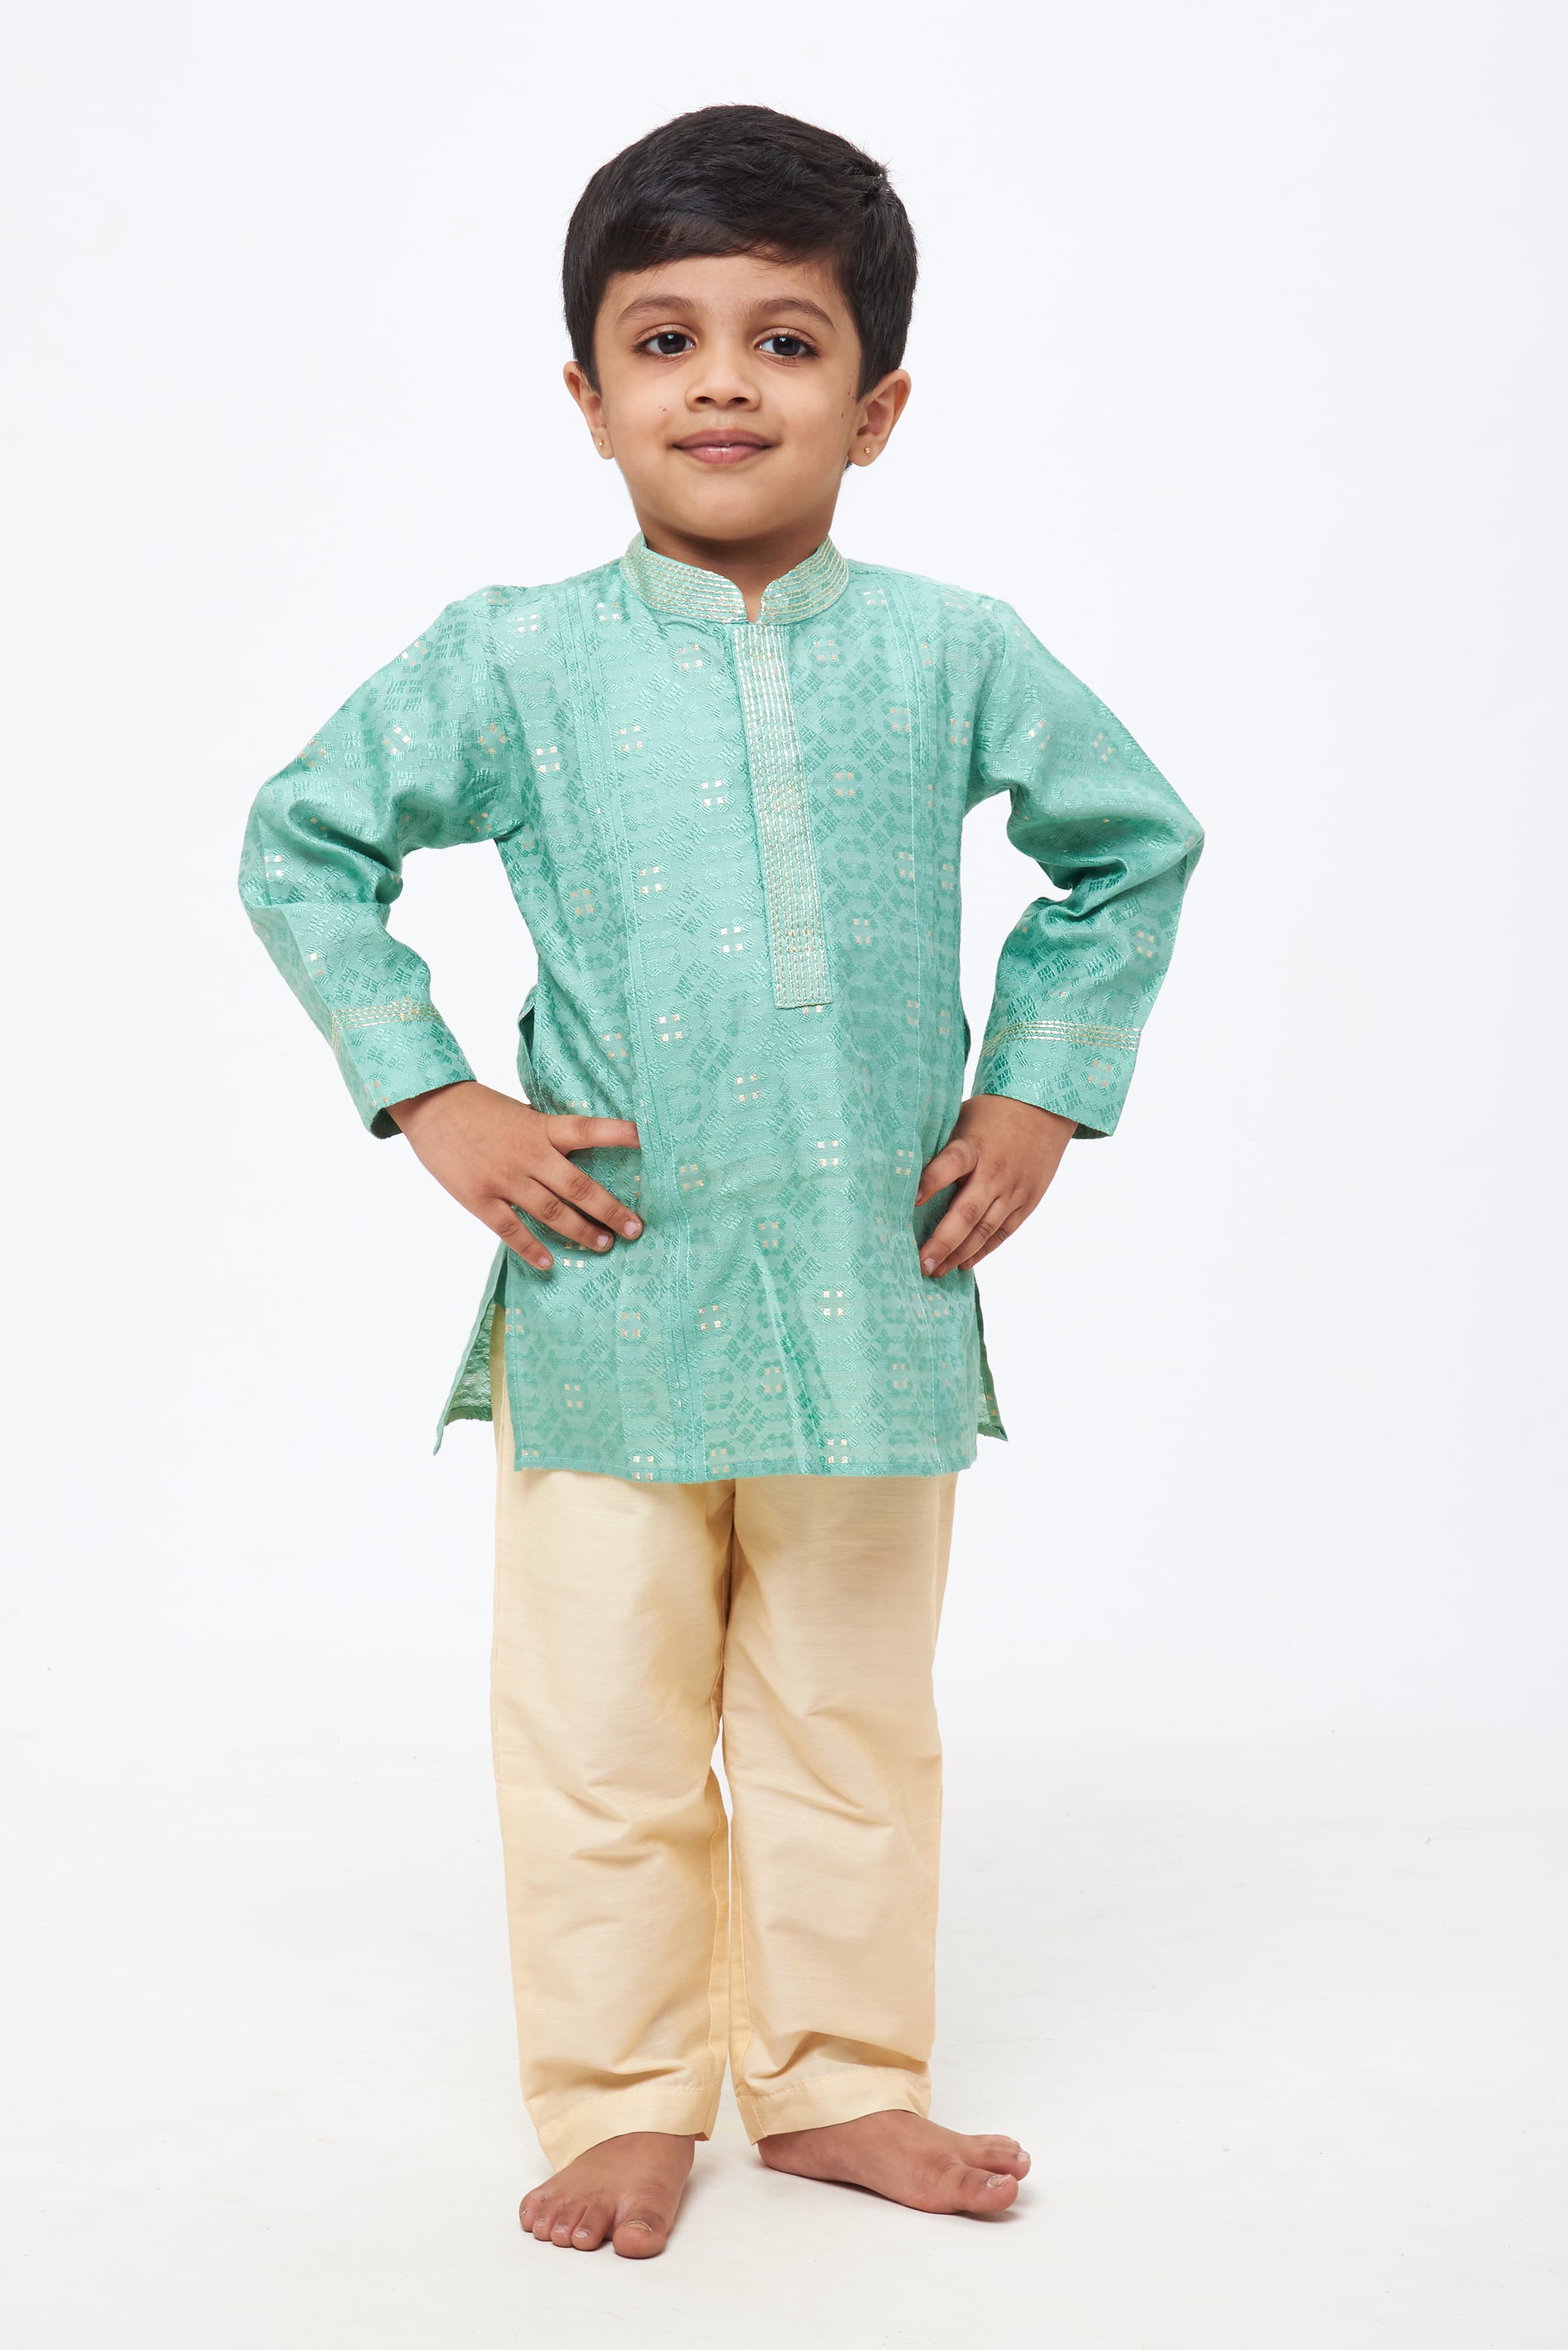 Buy A&J DESIGN Baby Boys Gentleman Suit, 2Pcs Outfit Shirt & Pants, Blue  Khaki, 12-18 Months at Amazon.in